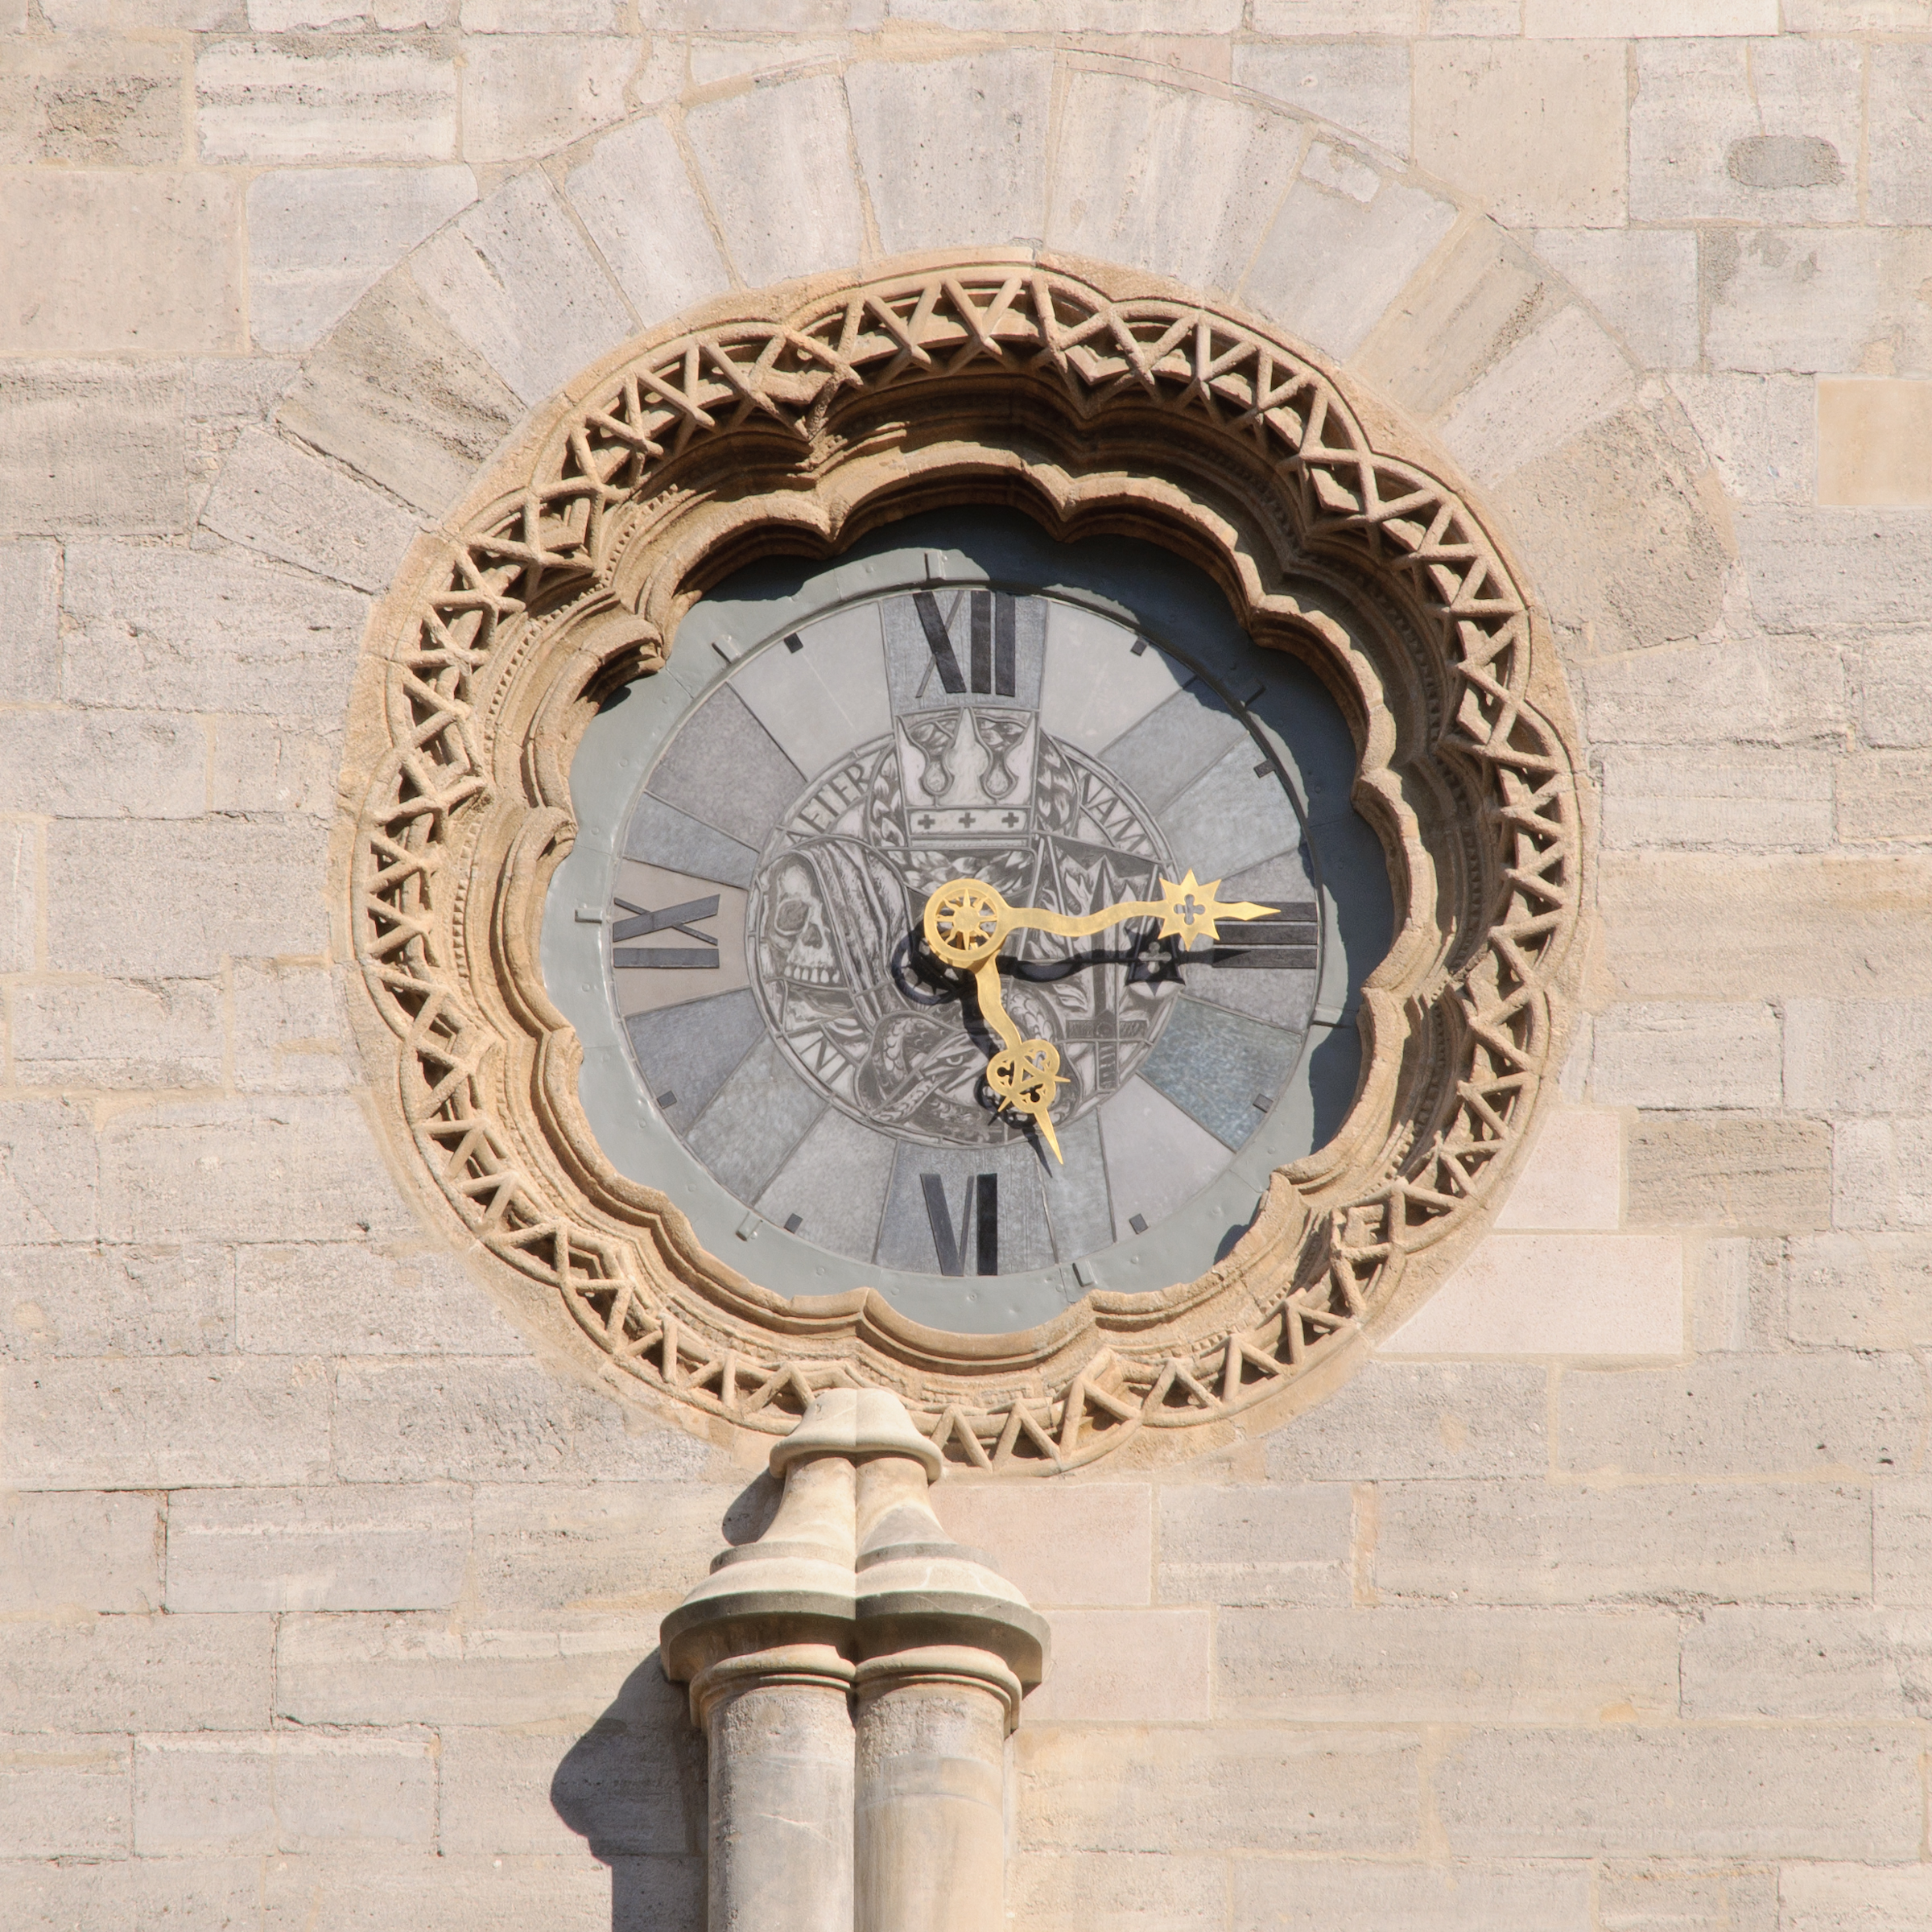 St. Stephen's Cathedral clock - Vienna